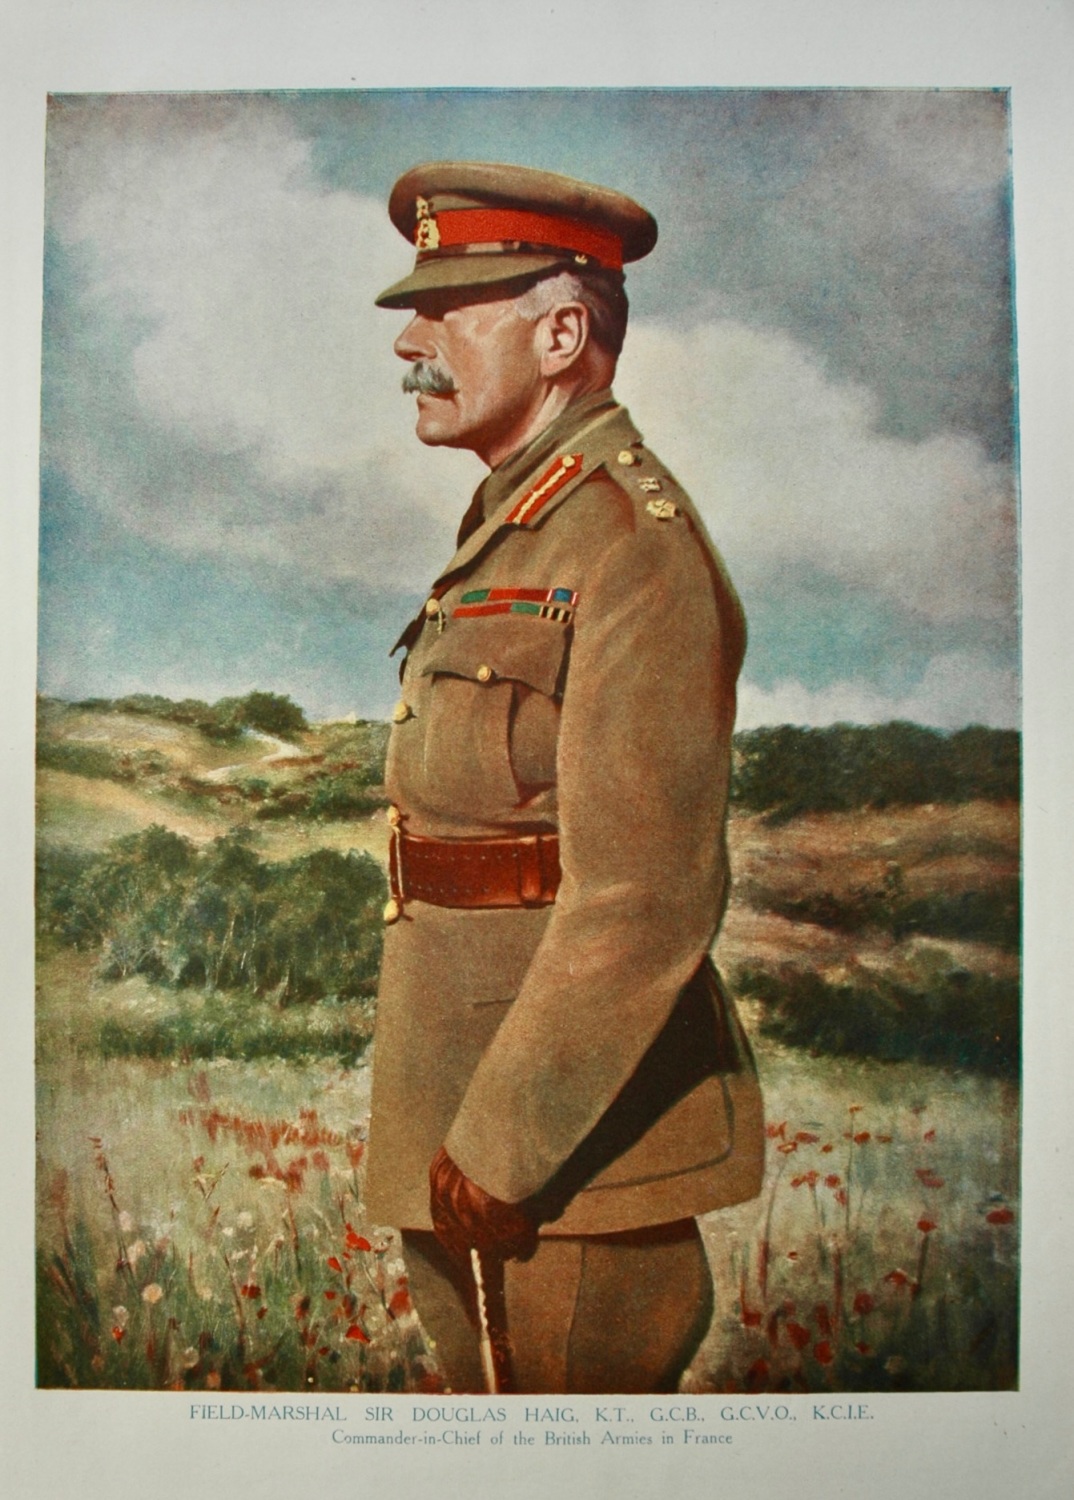 Field-Marshal Sir Douglas Haig.  K.T.,  G.C.B.,  G.C.V.O.,  K.C.I.E.  Comma